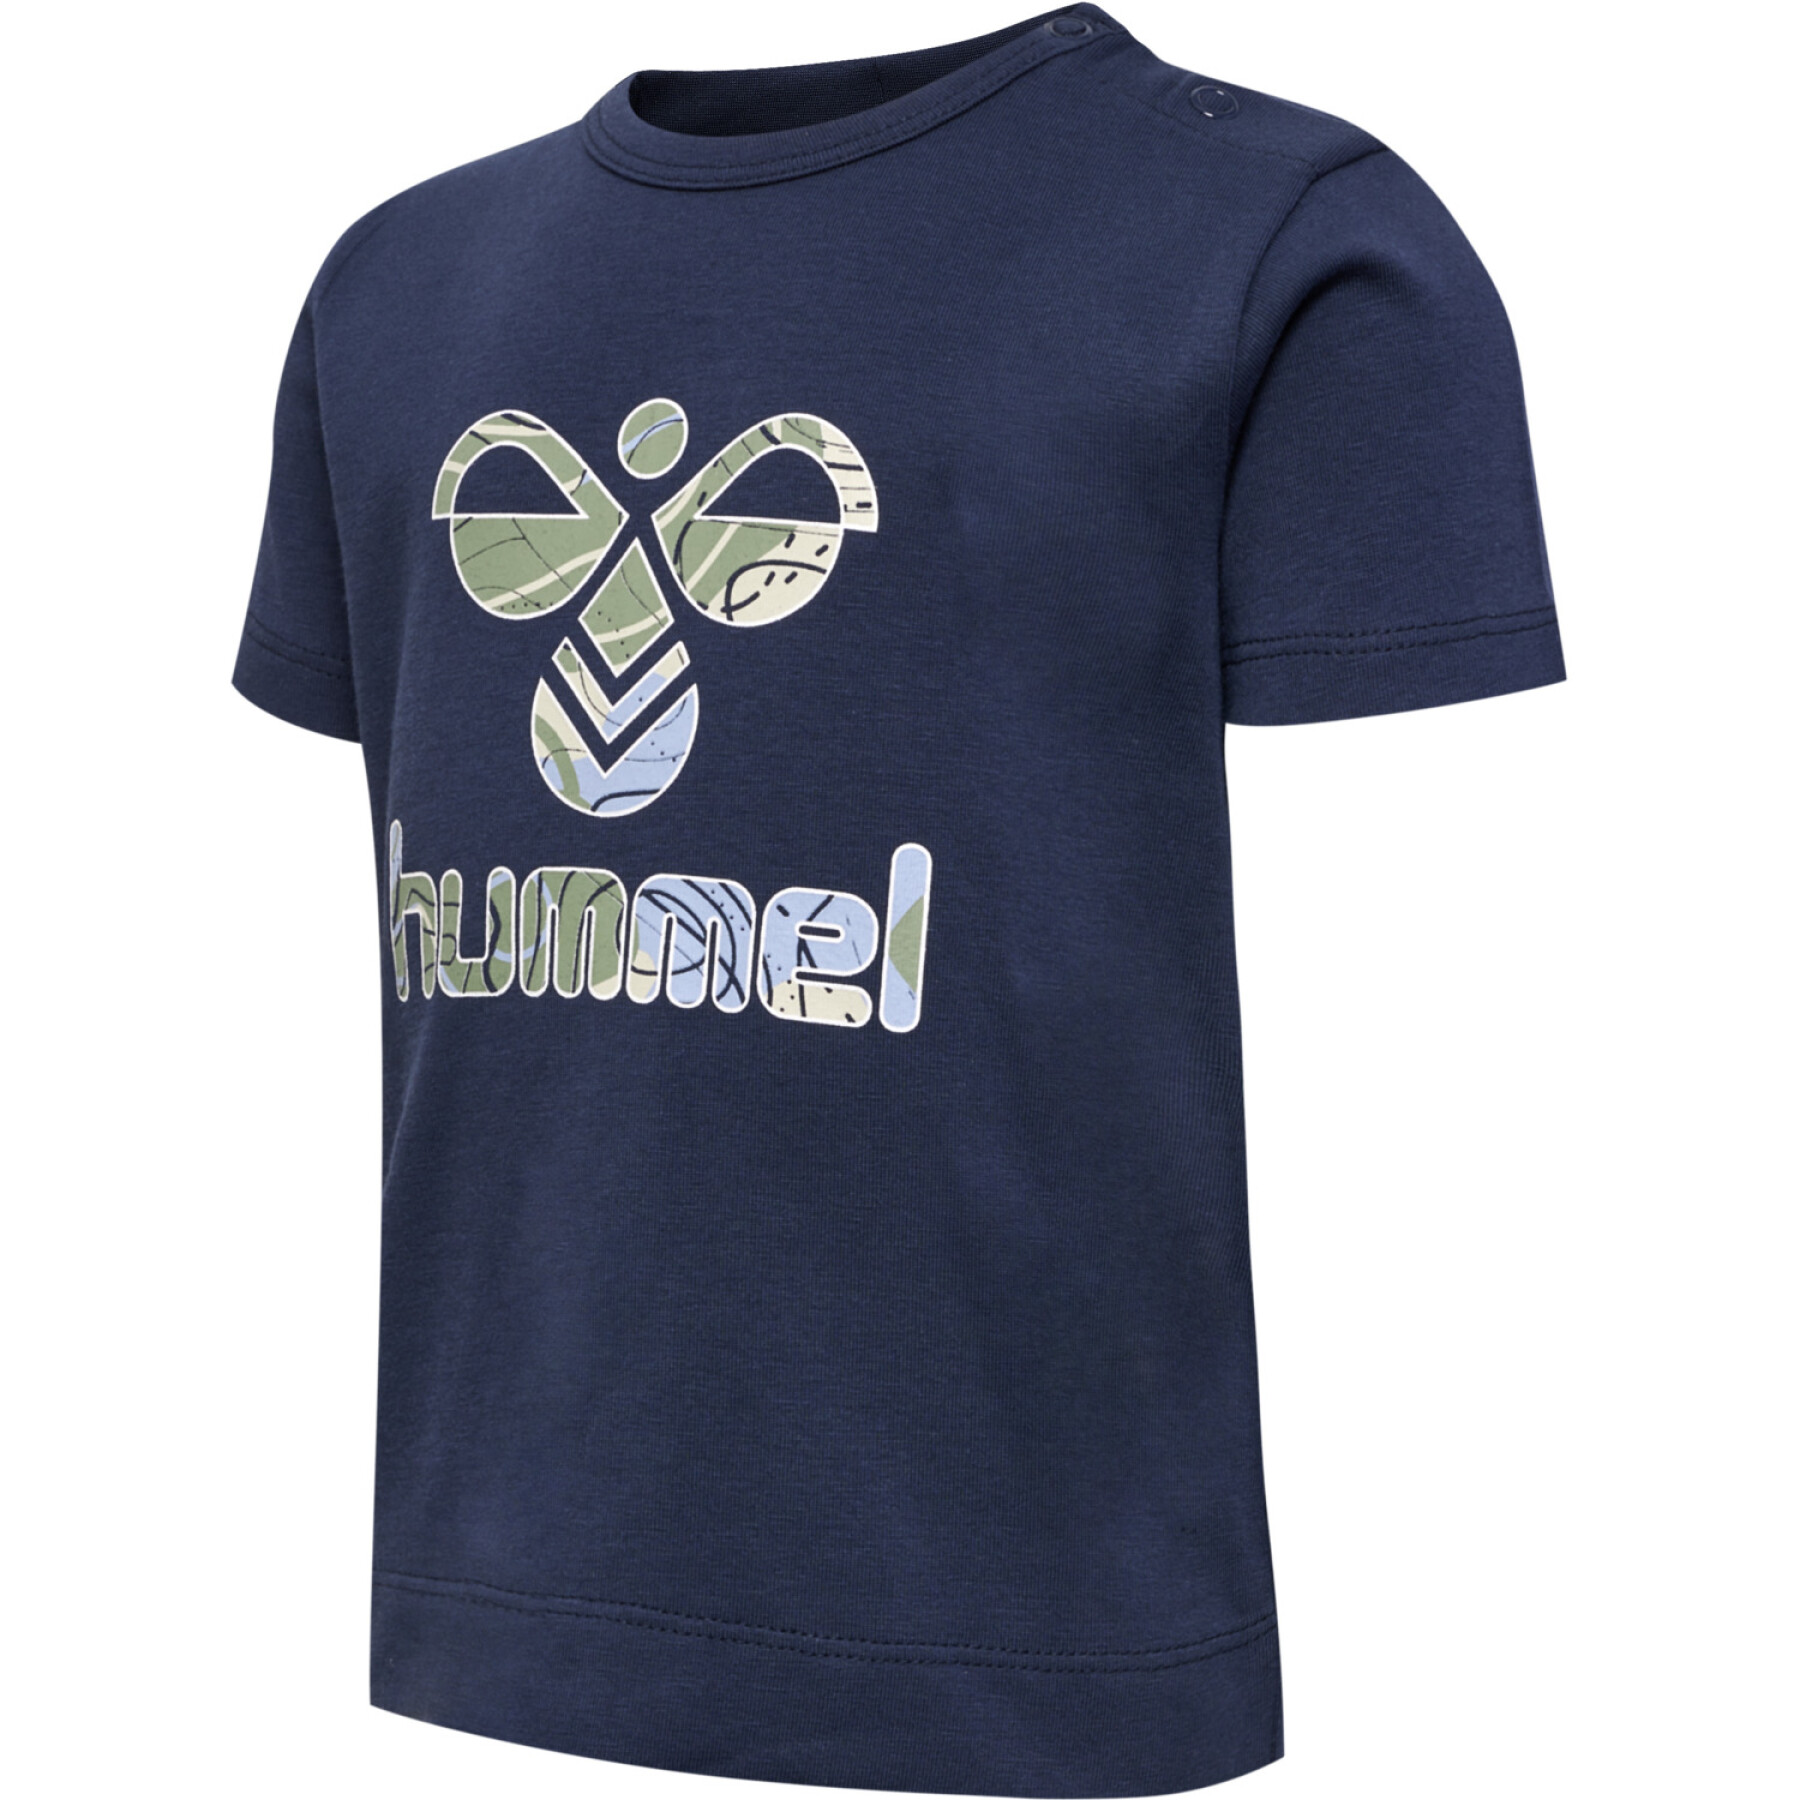 Baby's T-shirt Hummel Lehn